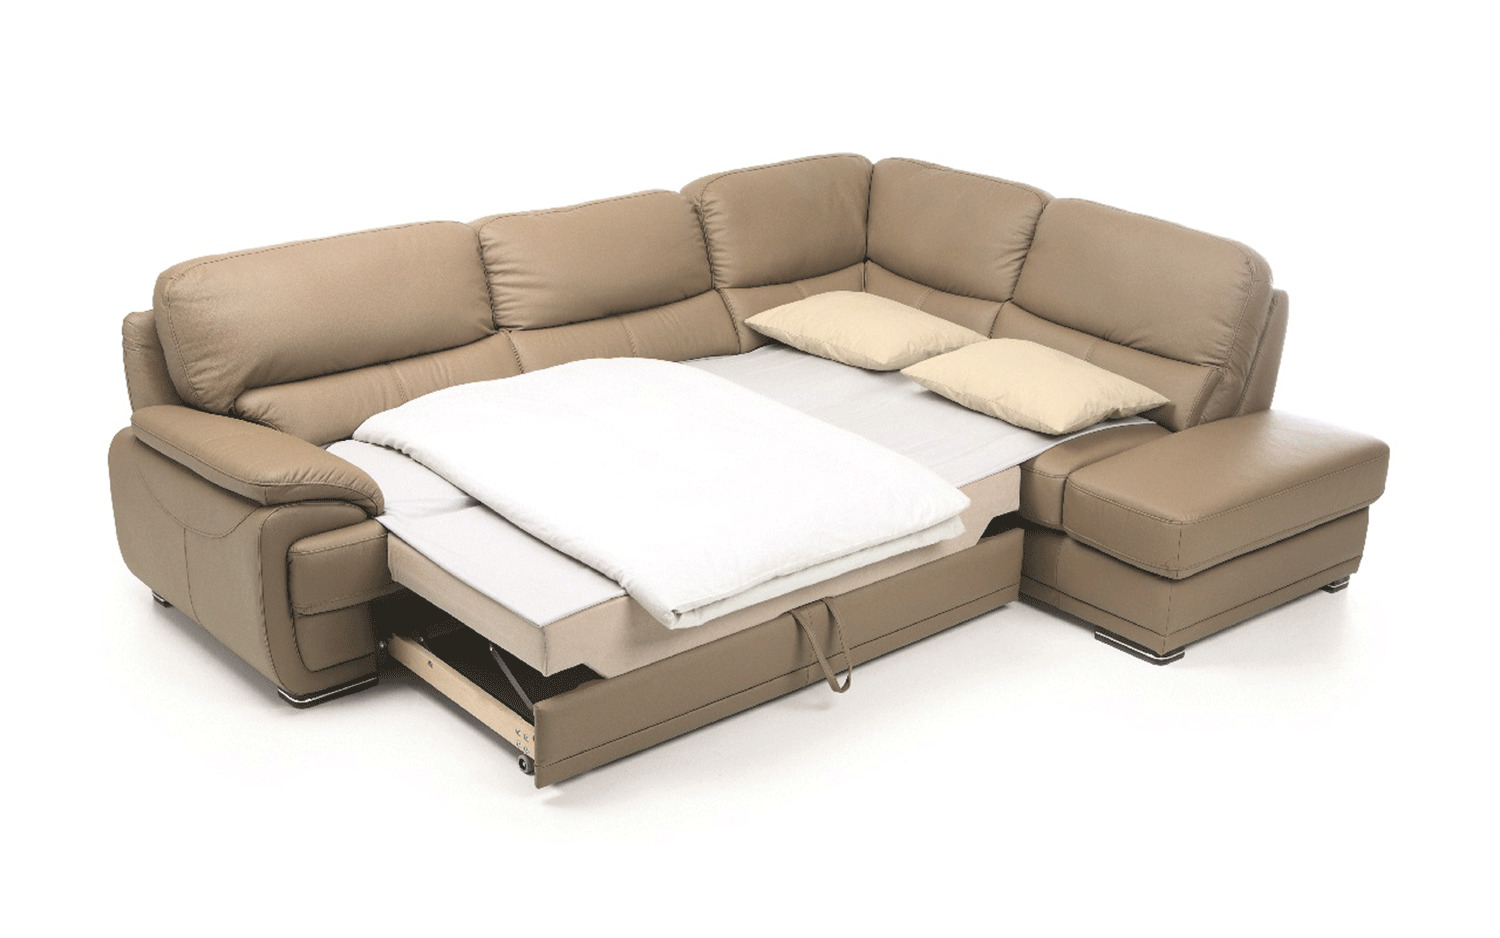 leather sleeper sectional sofa west elm